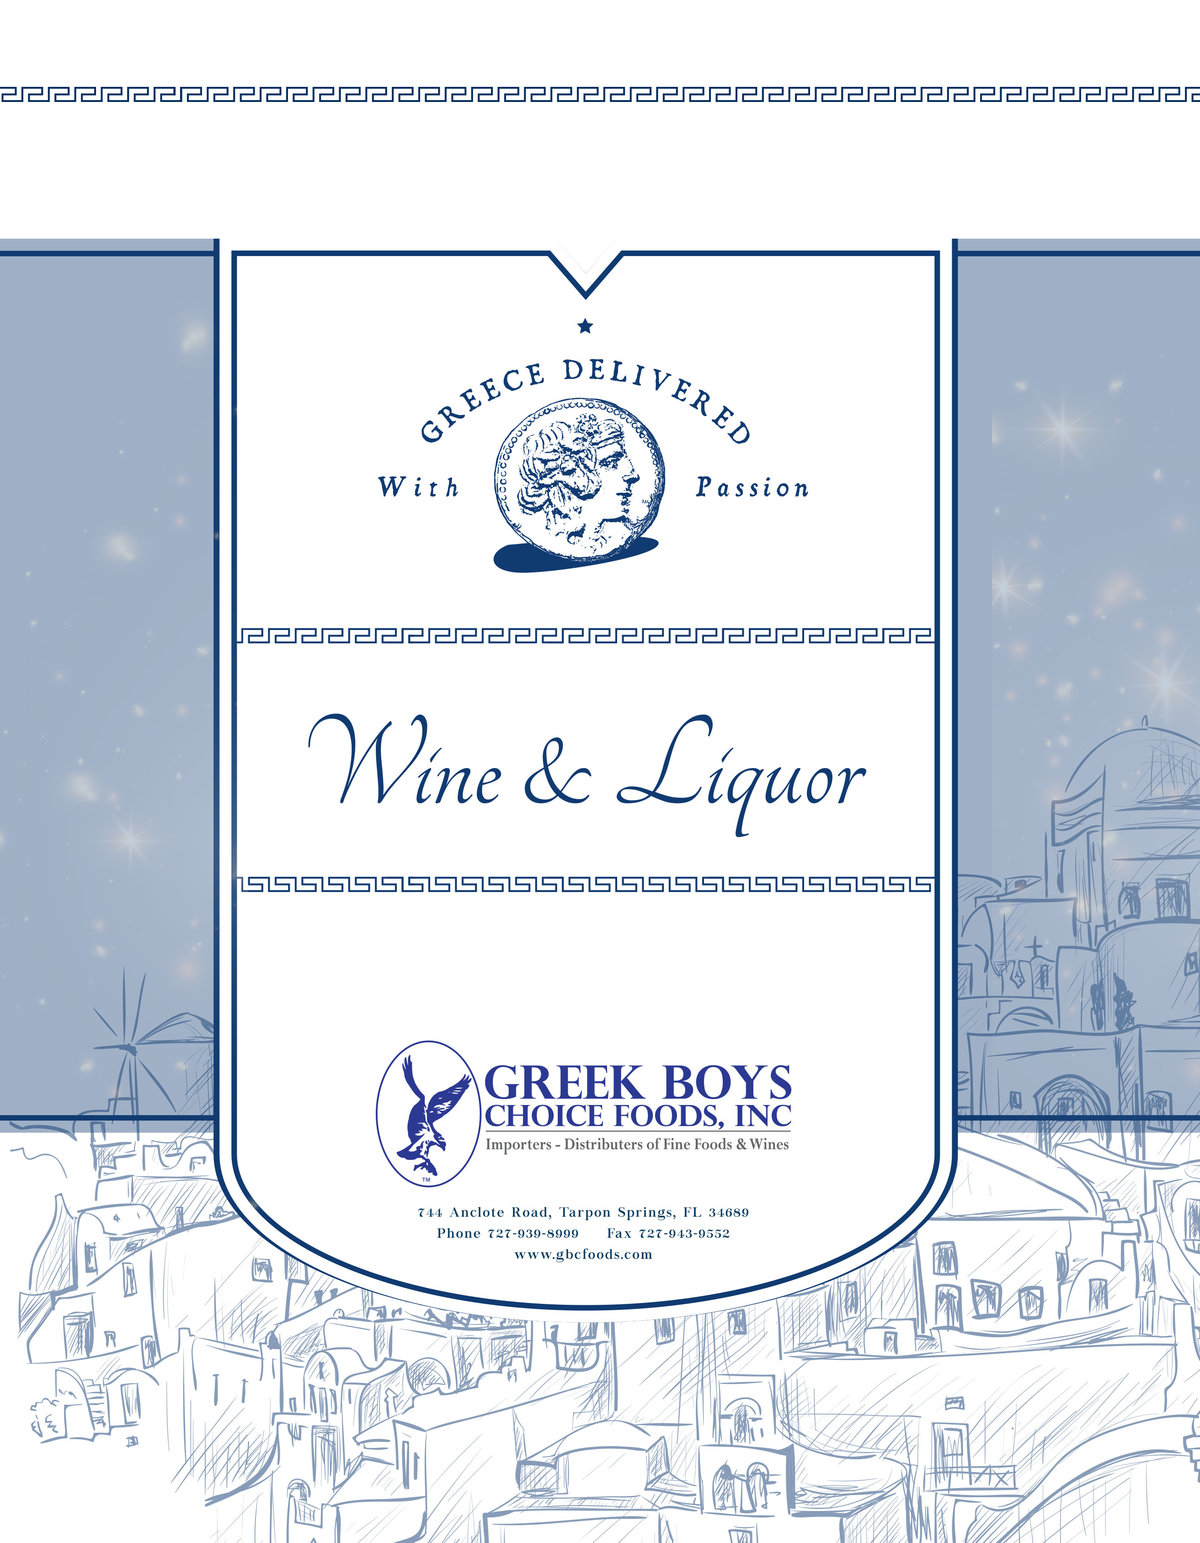 GreekBoys_Wine&Liquor_Page_01